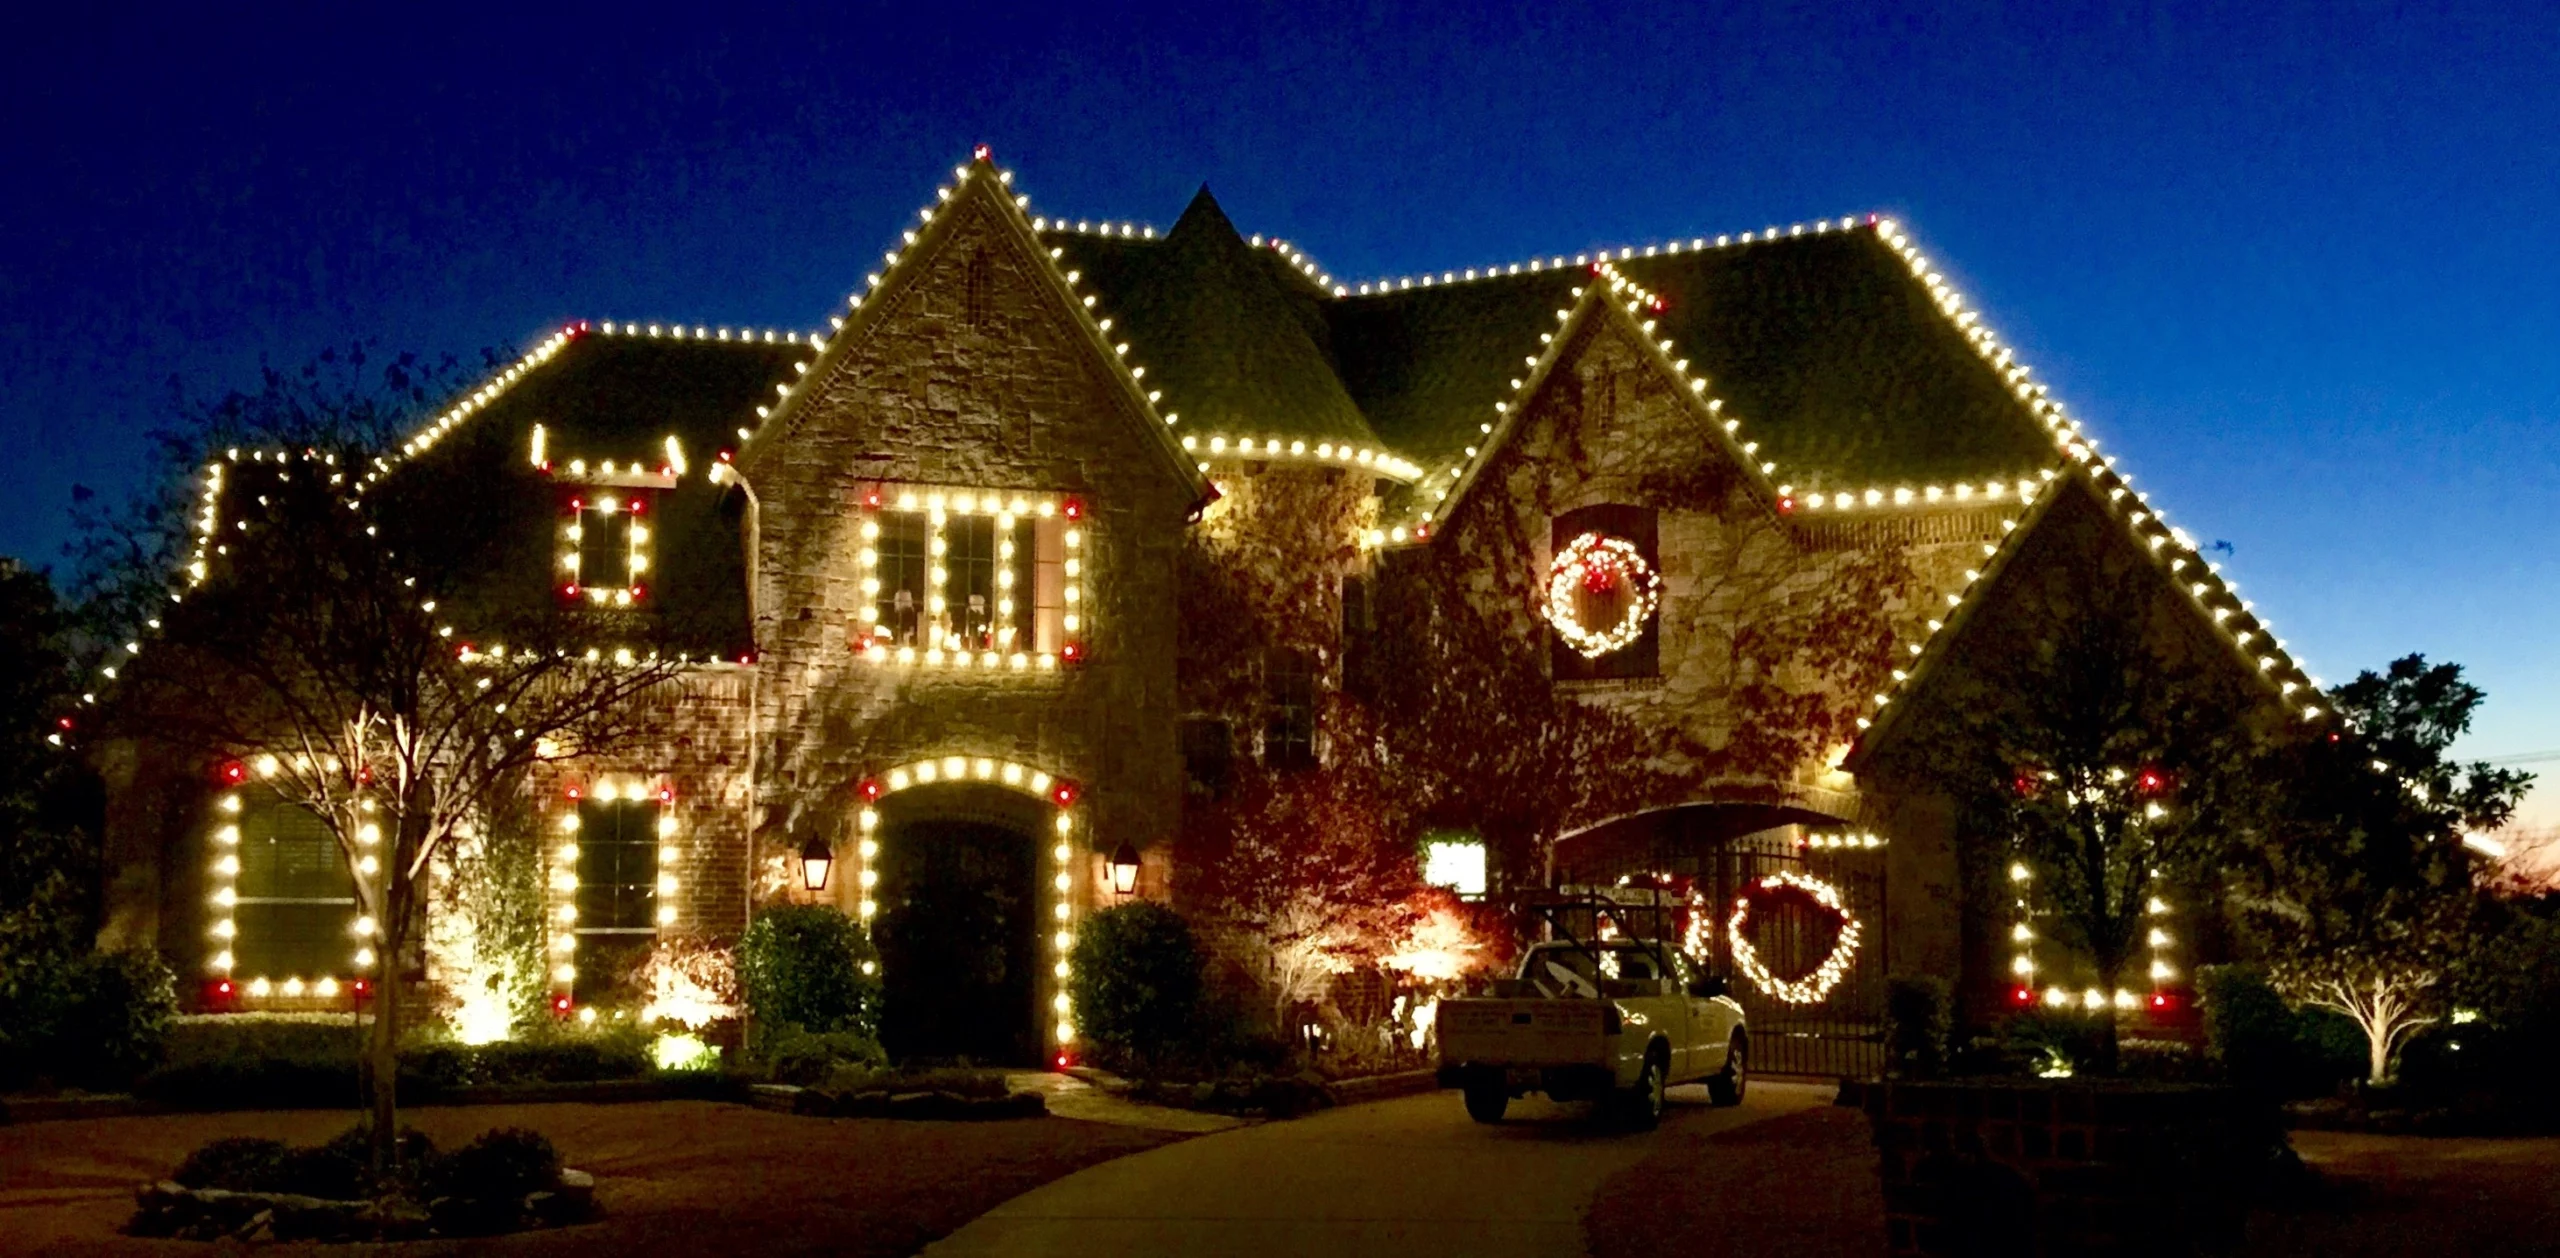 Residential Christmas lights